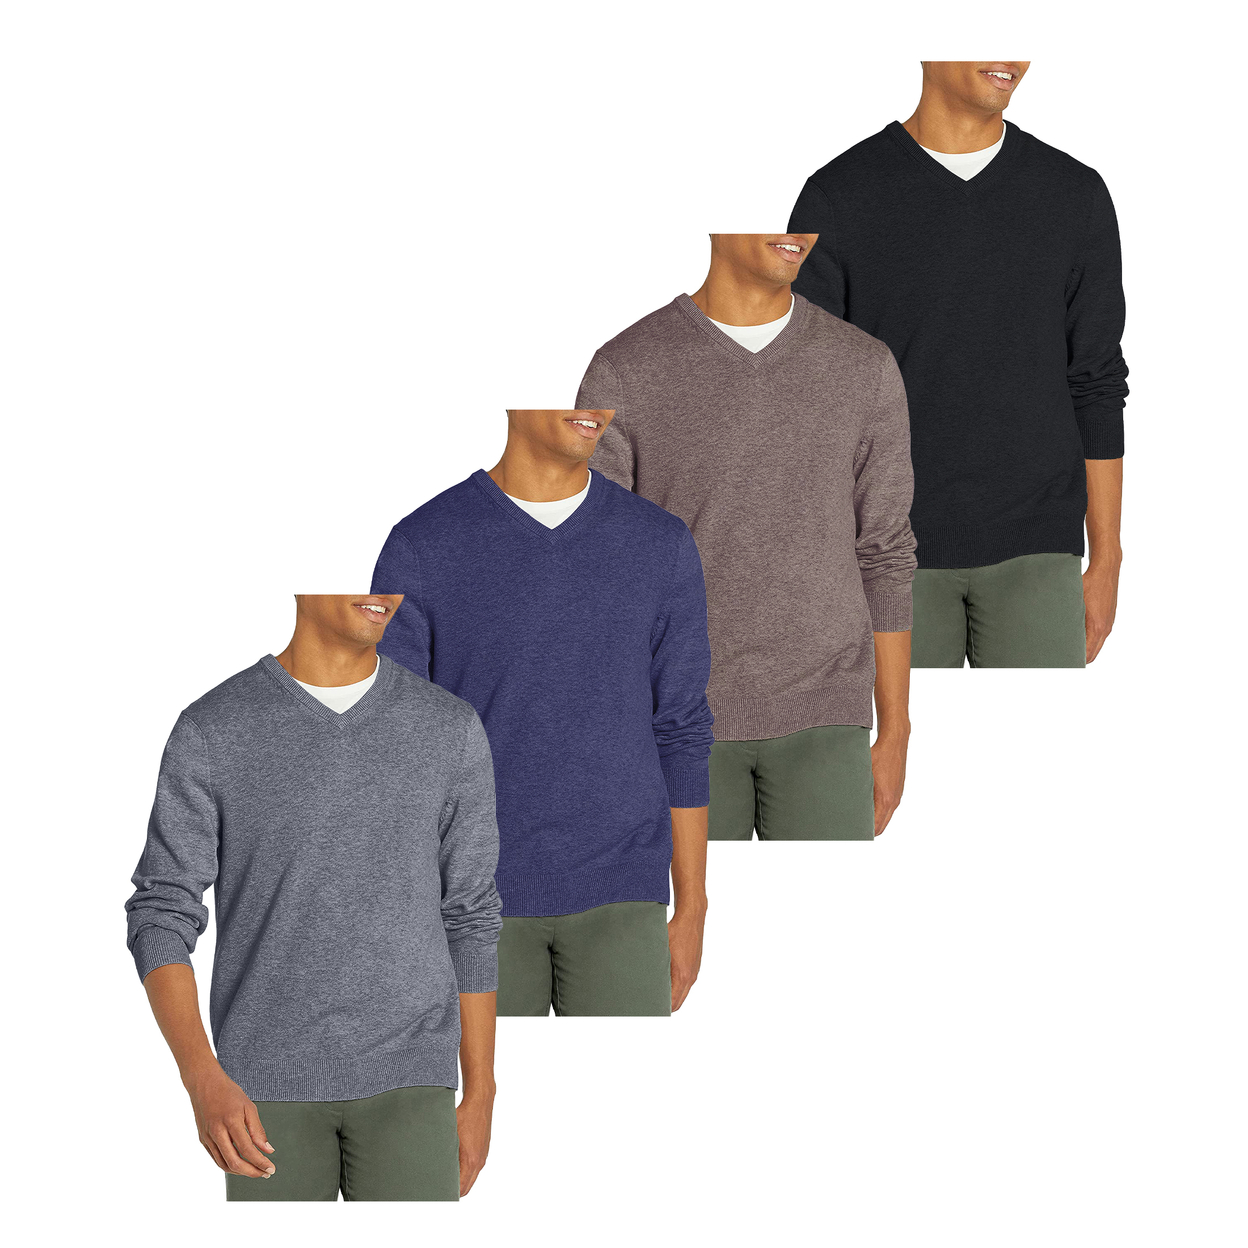 2-Pack: Men's Casual Ultra Soft Slim Fit Warm Knit V-Neck Sweater - Black & Blue, Xx-large